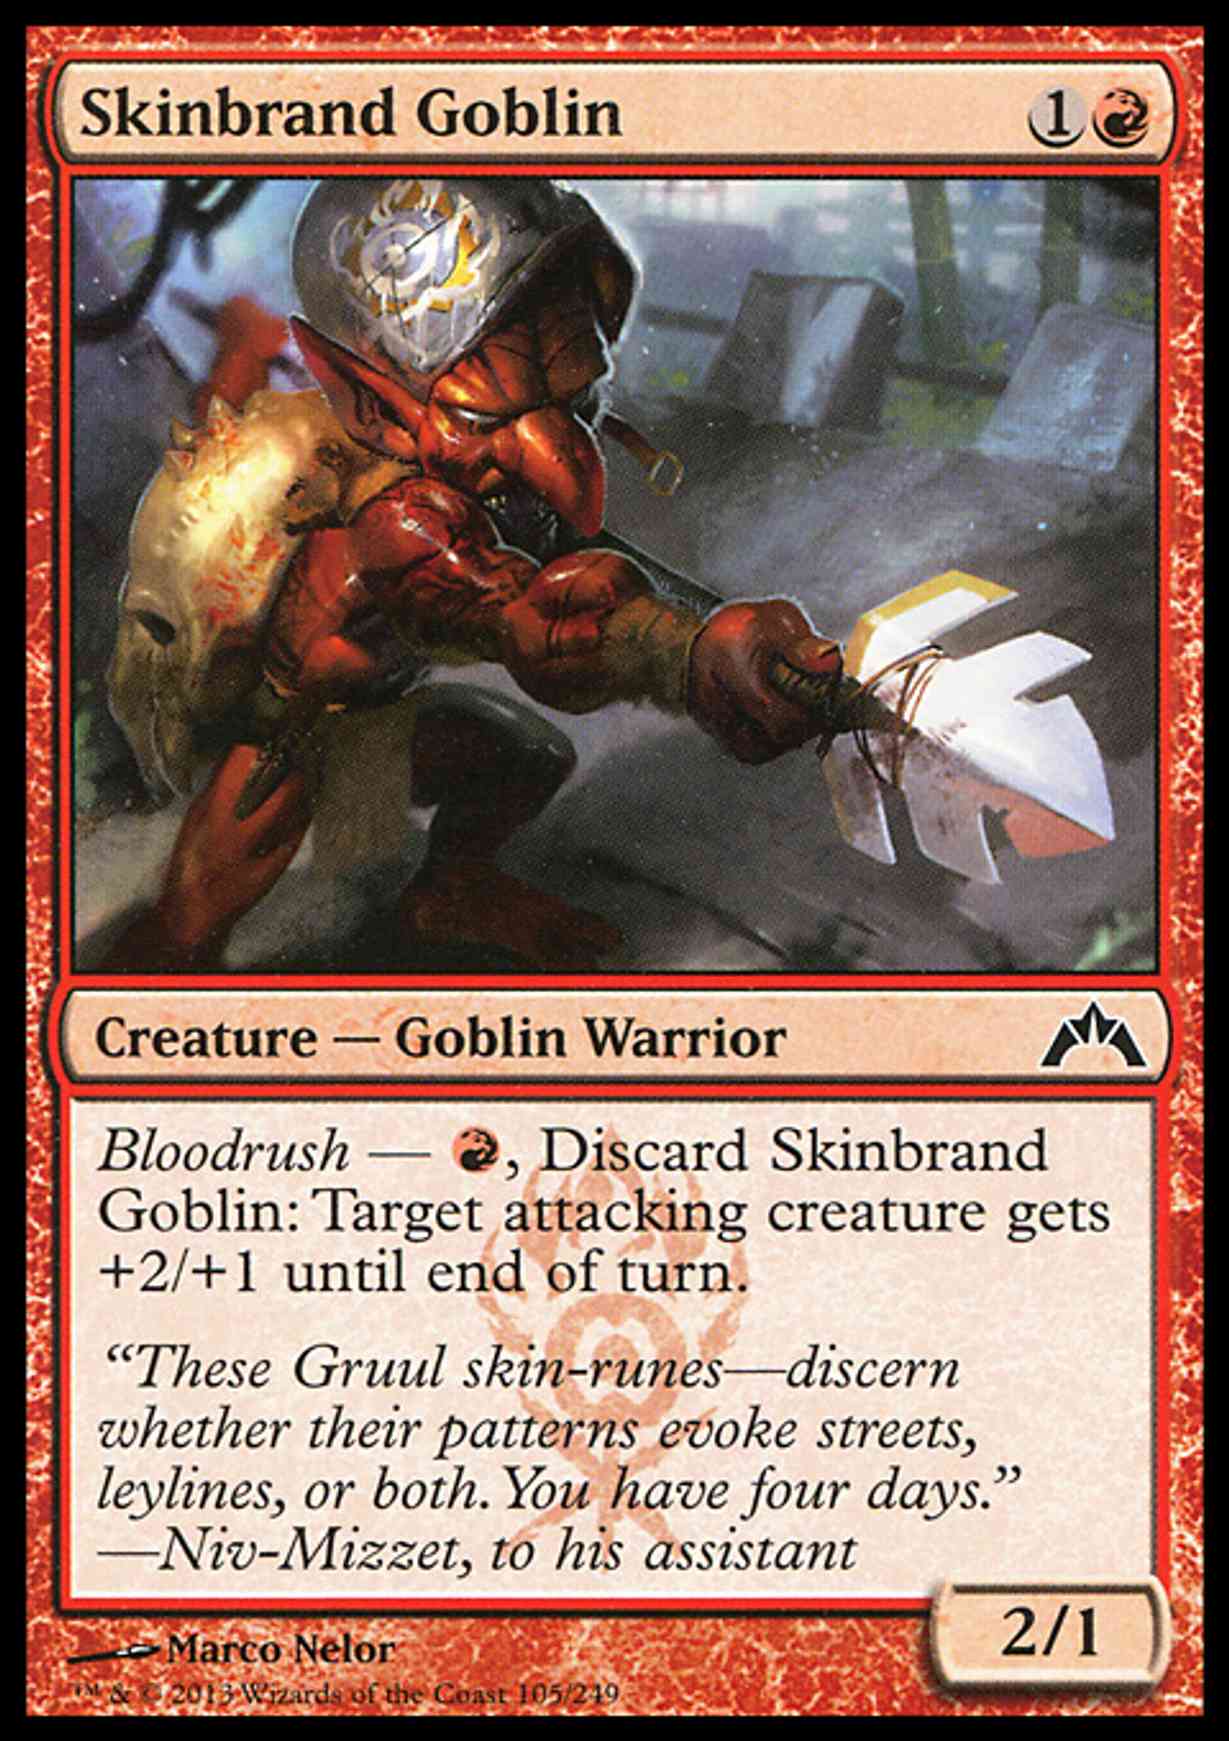 Skinbrand Goblin magic card front